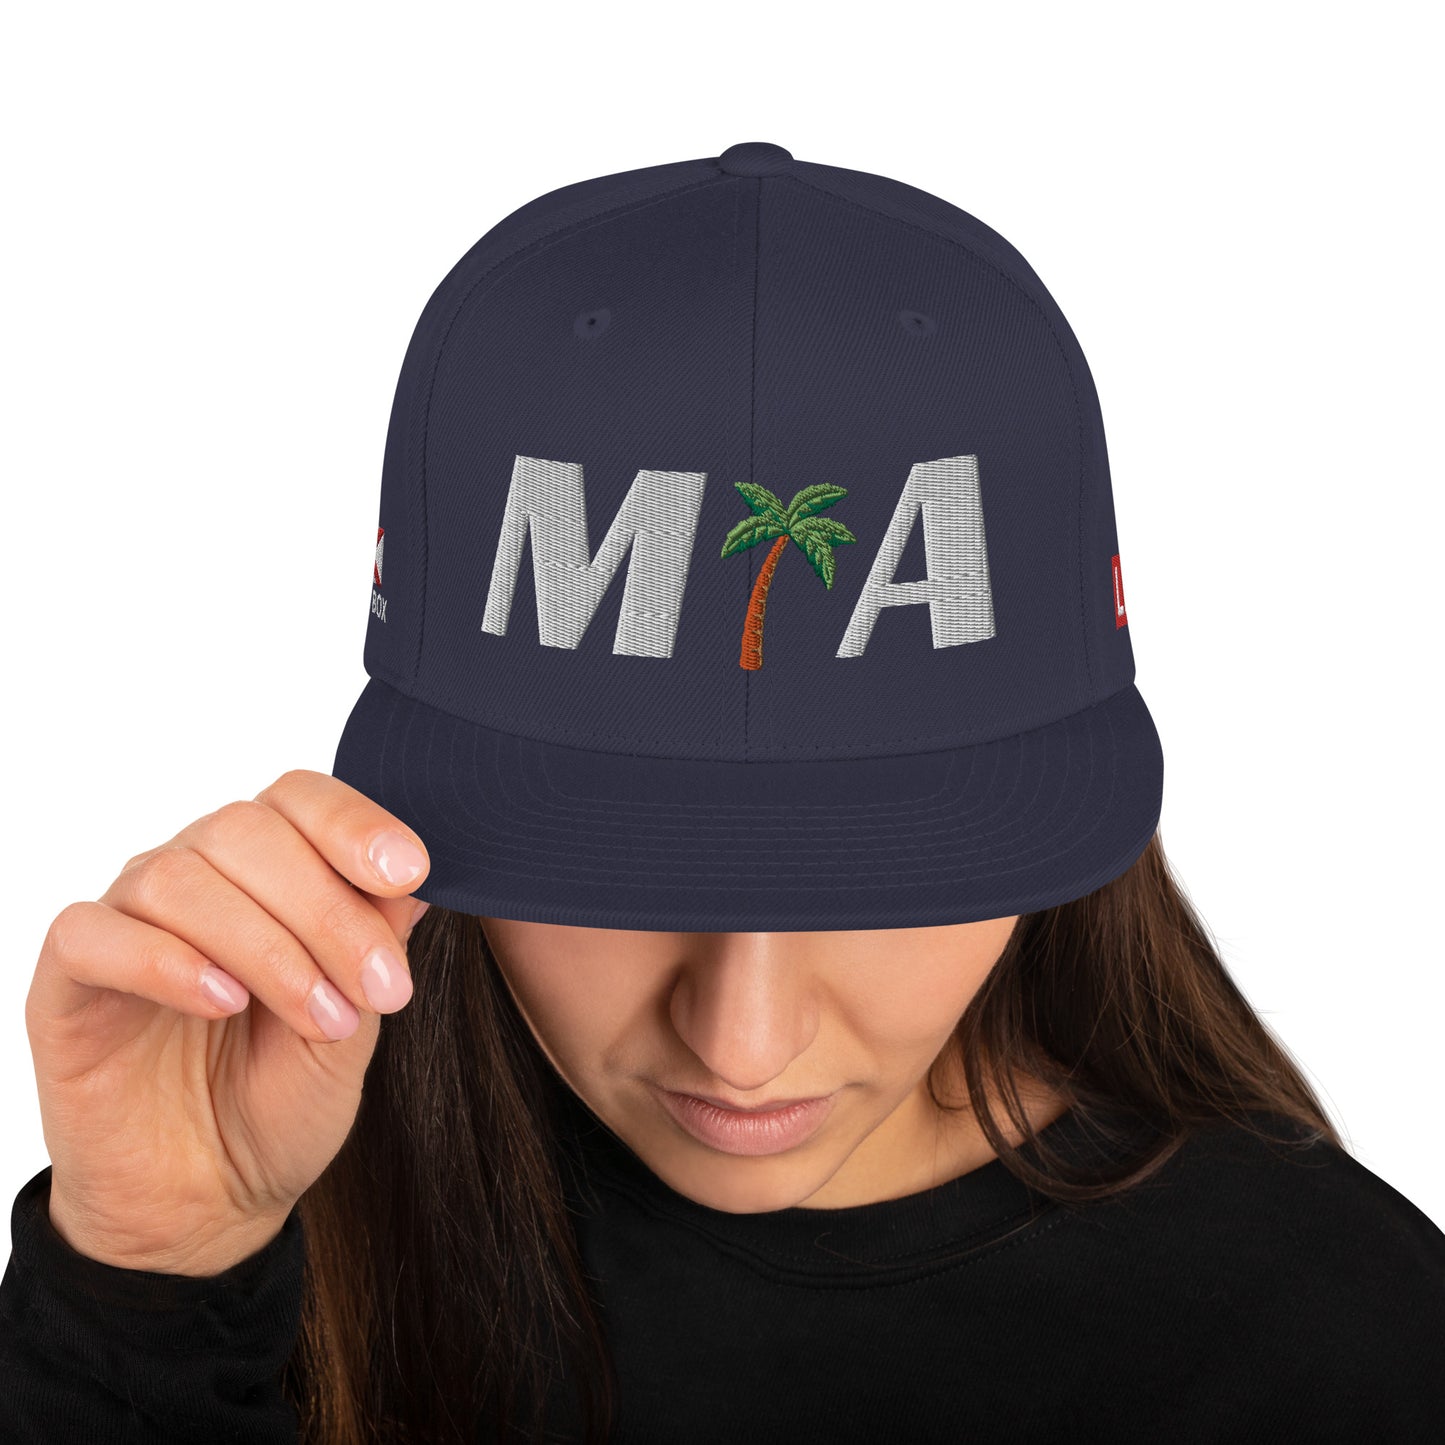 Hori's Box MIA LIVE Snapback Hat